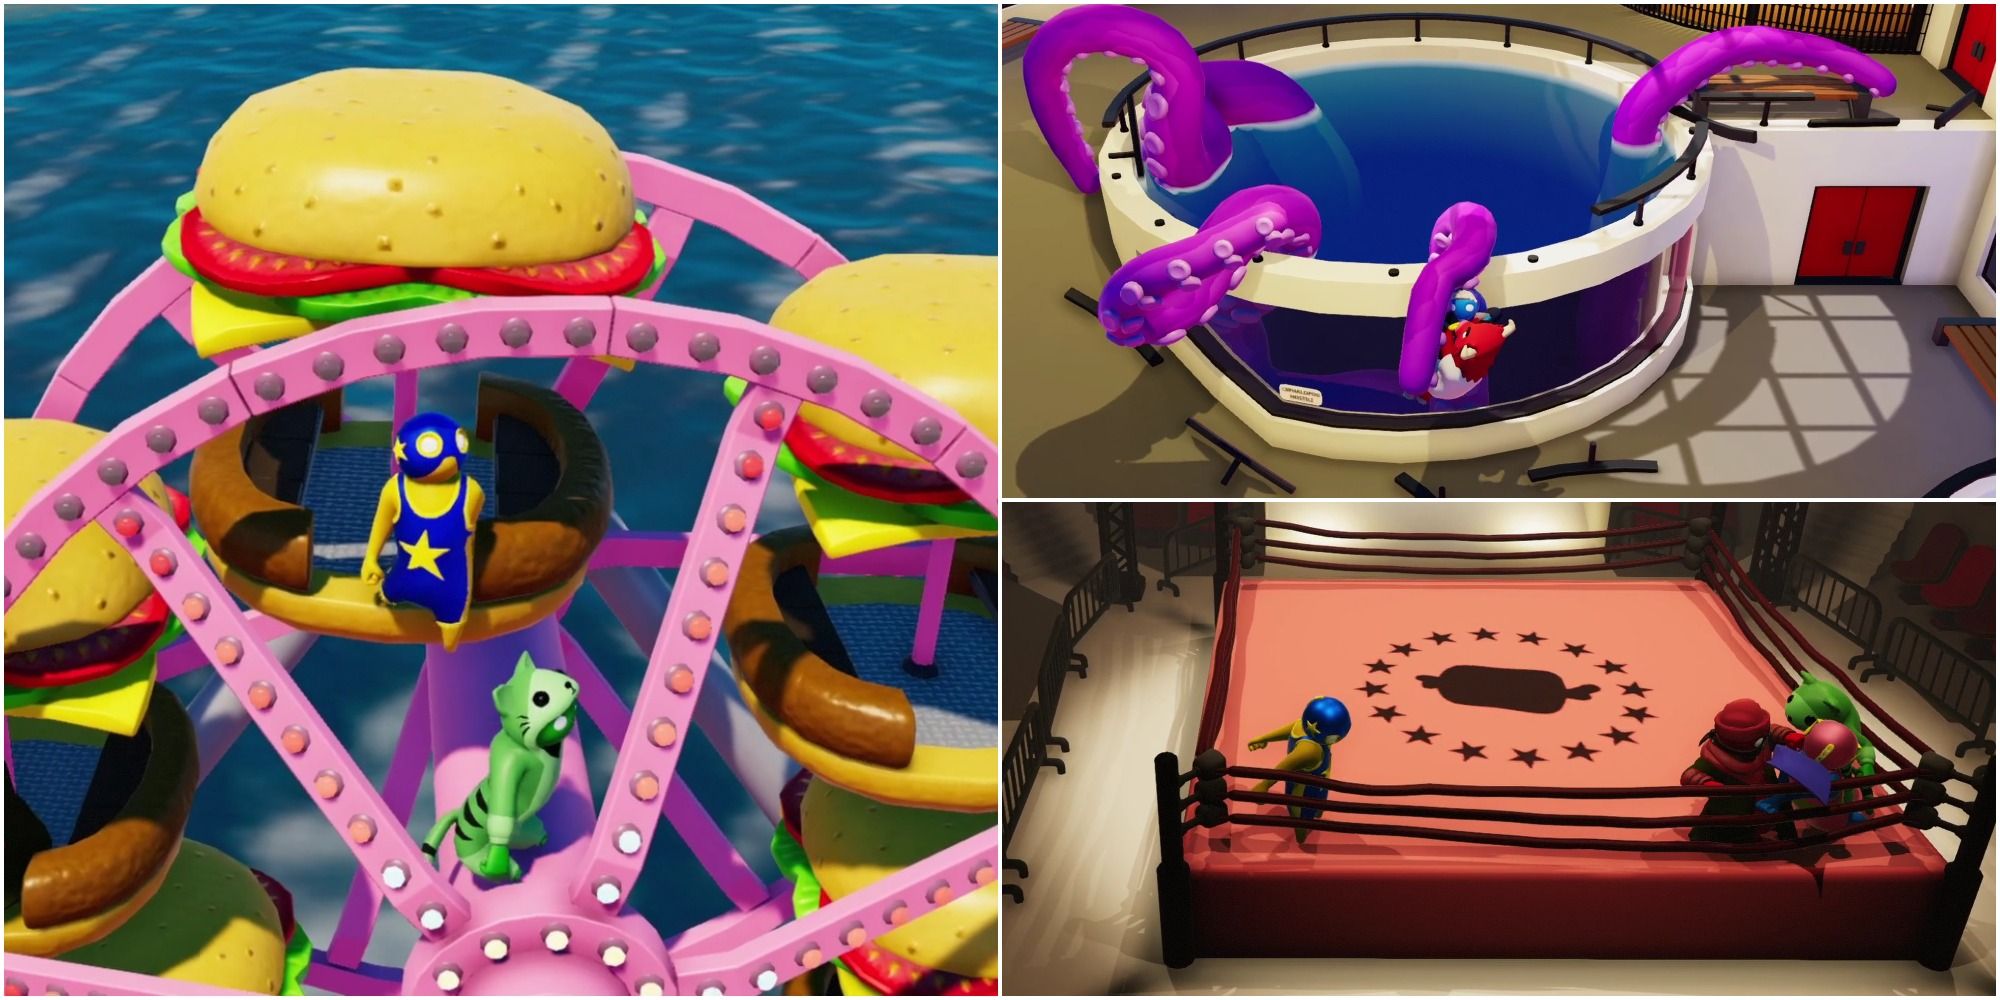 Gang Beasts: Ferris Wheel, Map Hazard Squid, Multiplayer Brawl In Featured Image